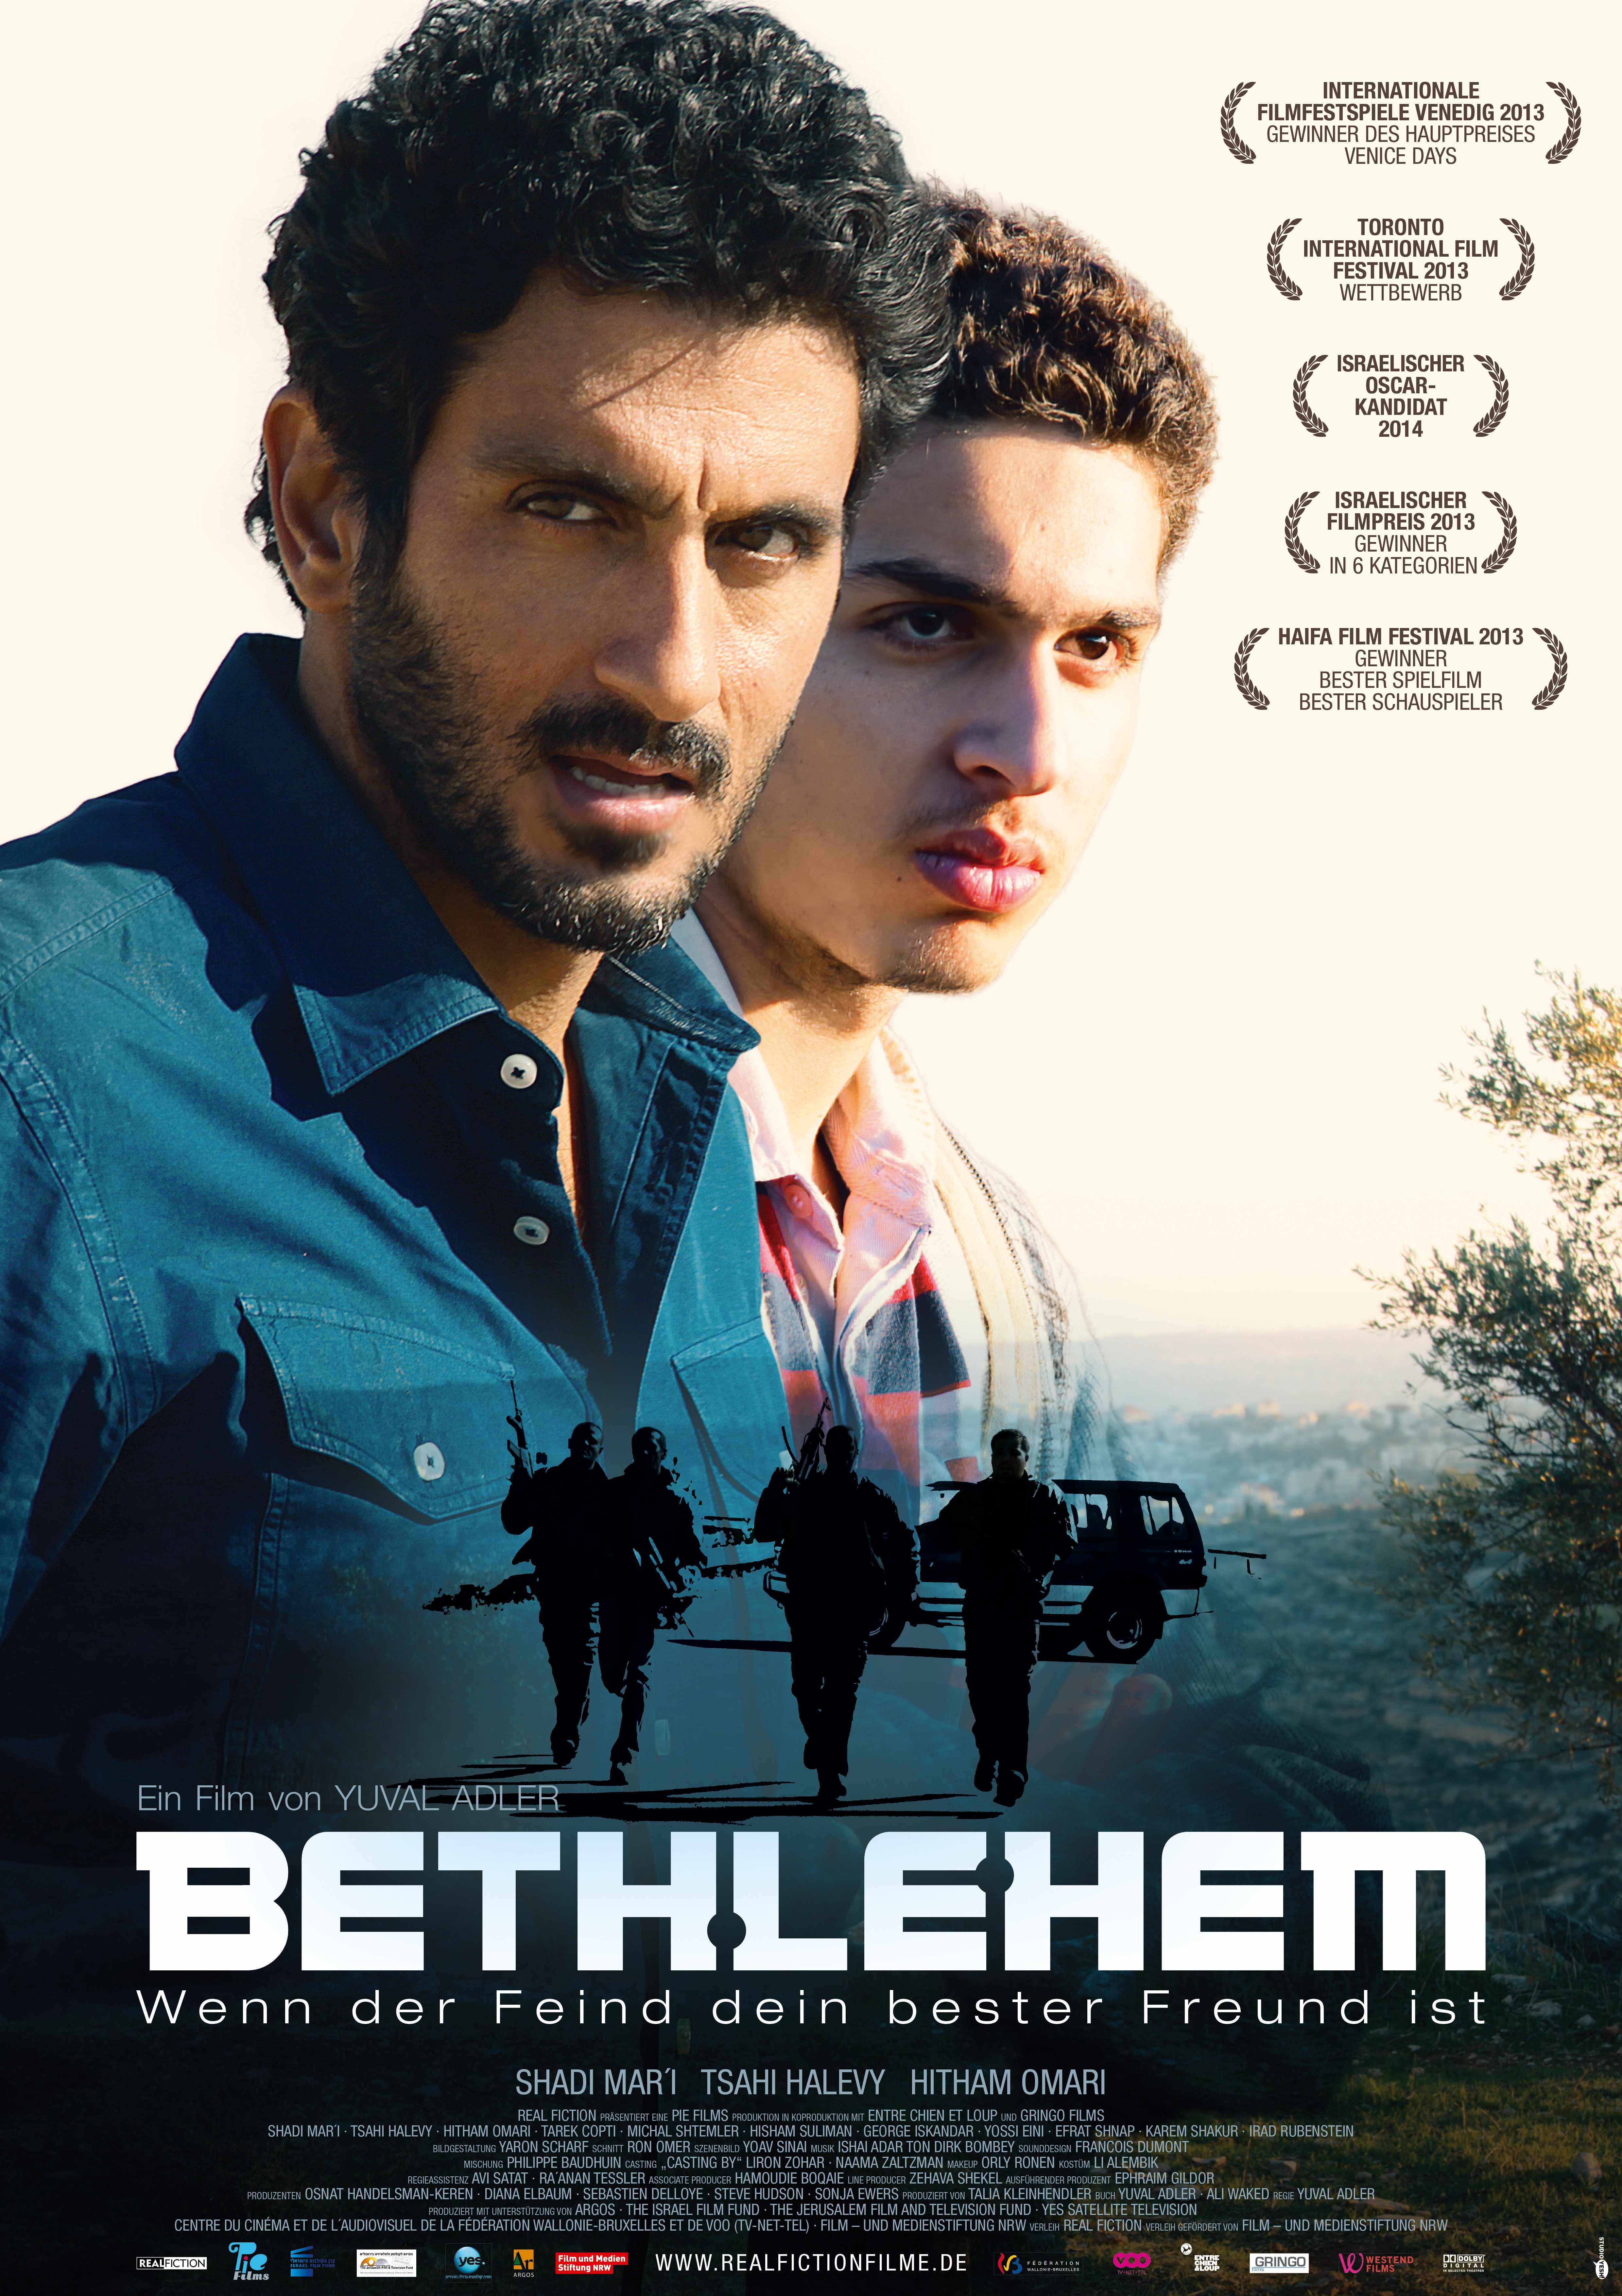 Bethlehem kinofreund